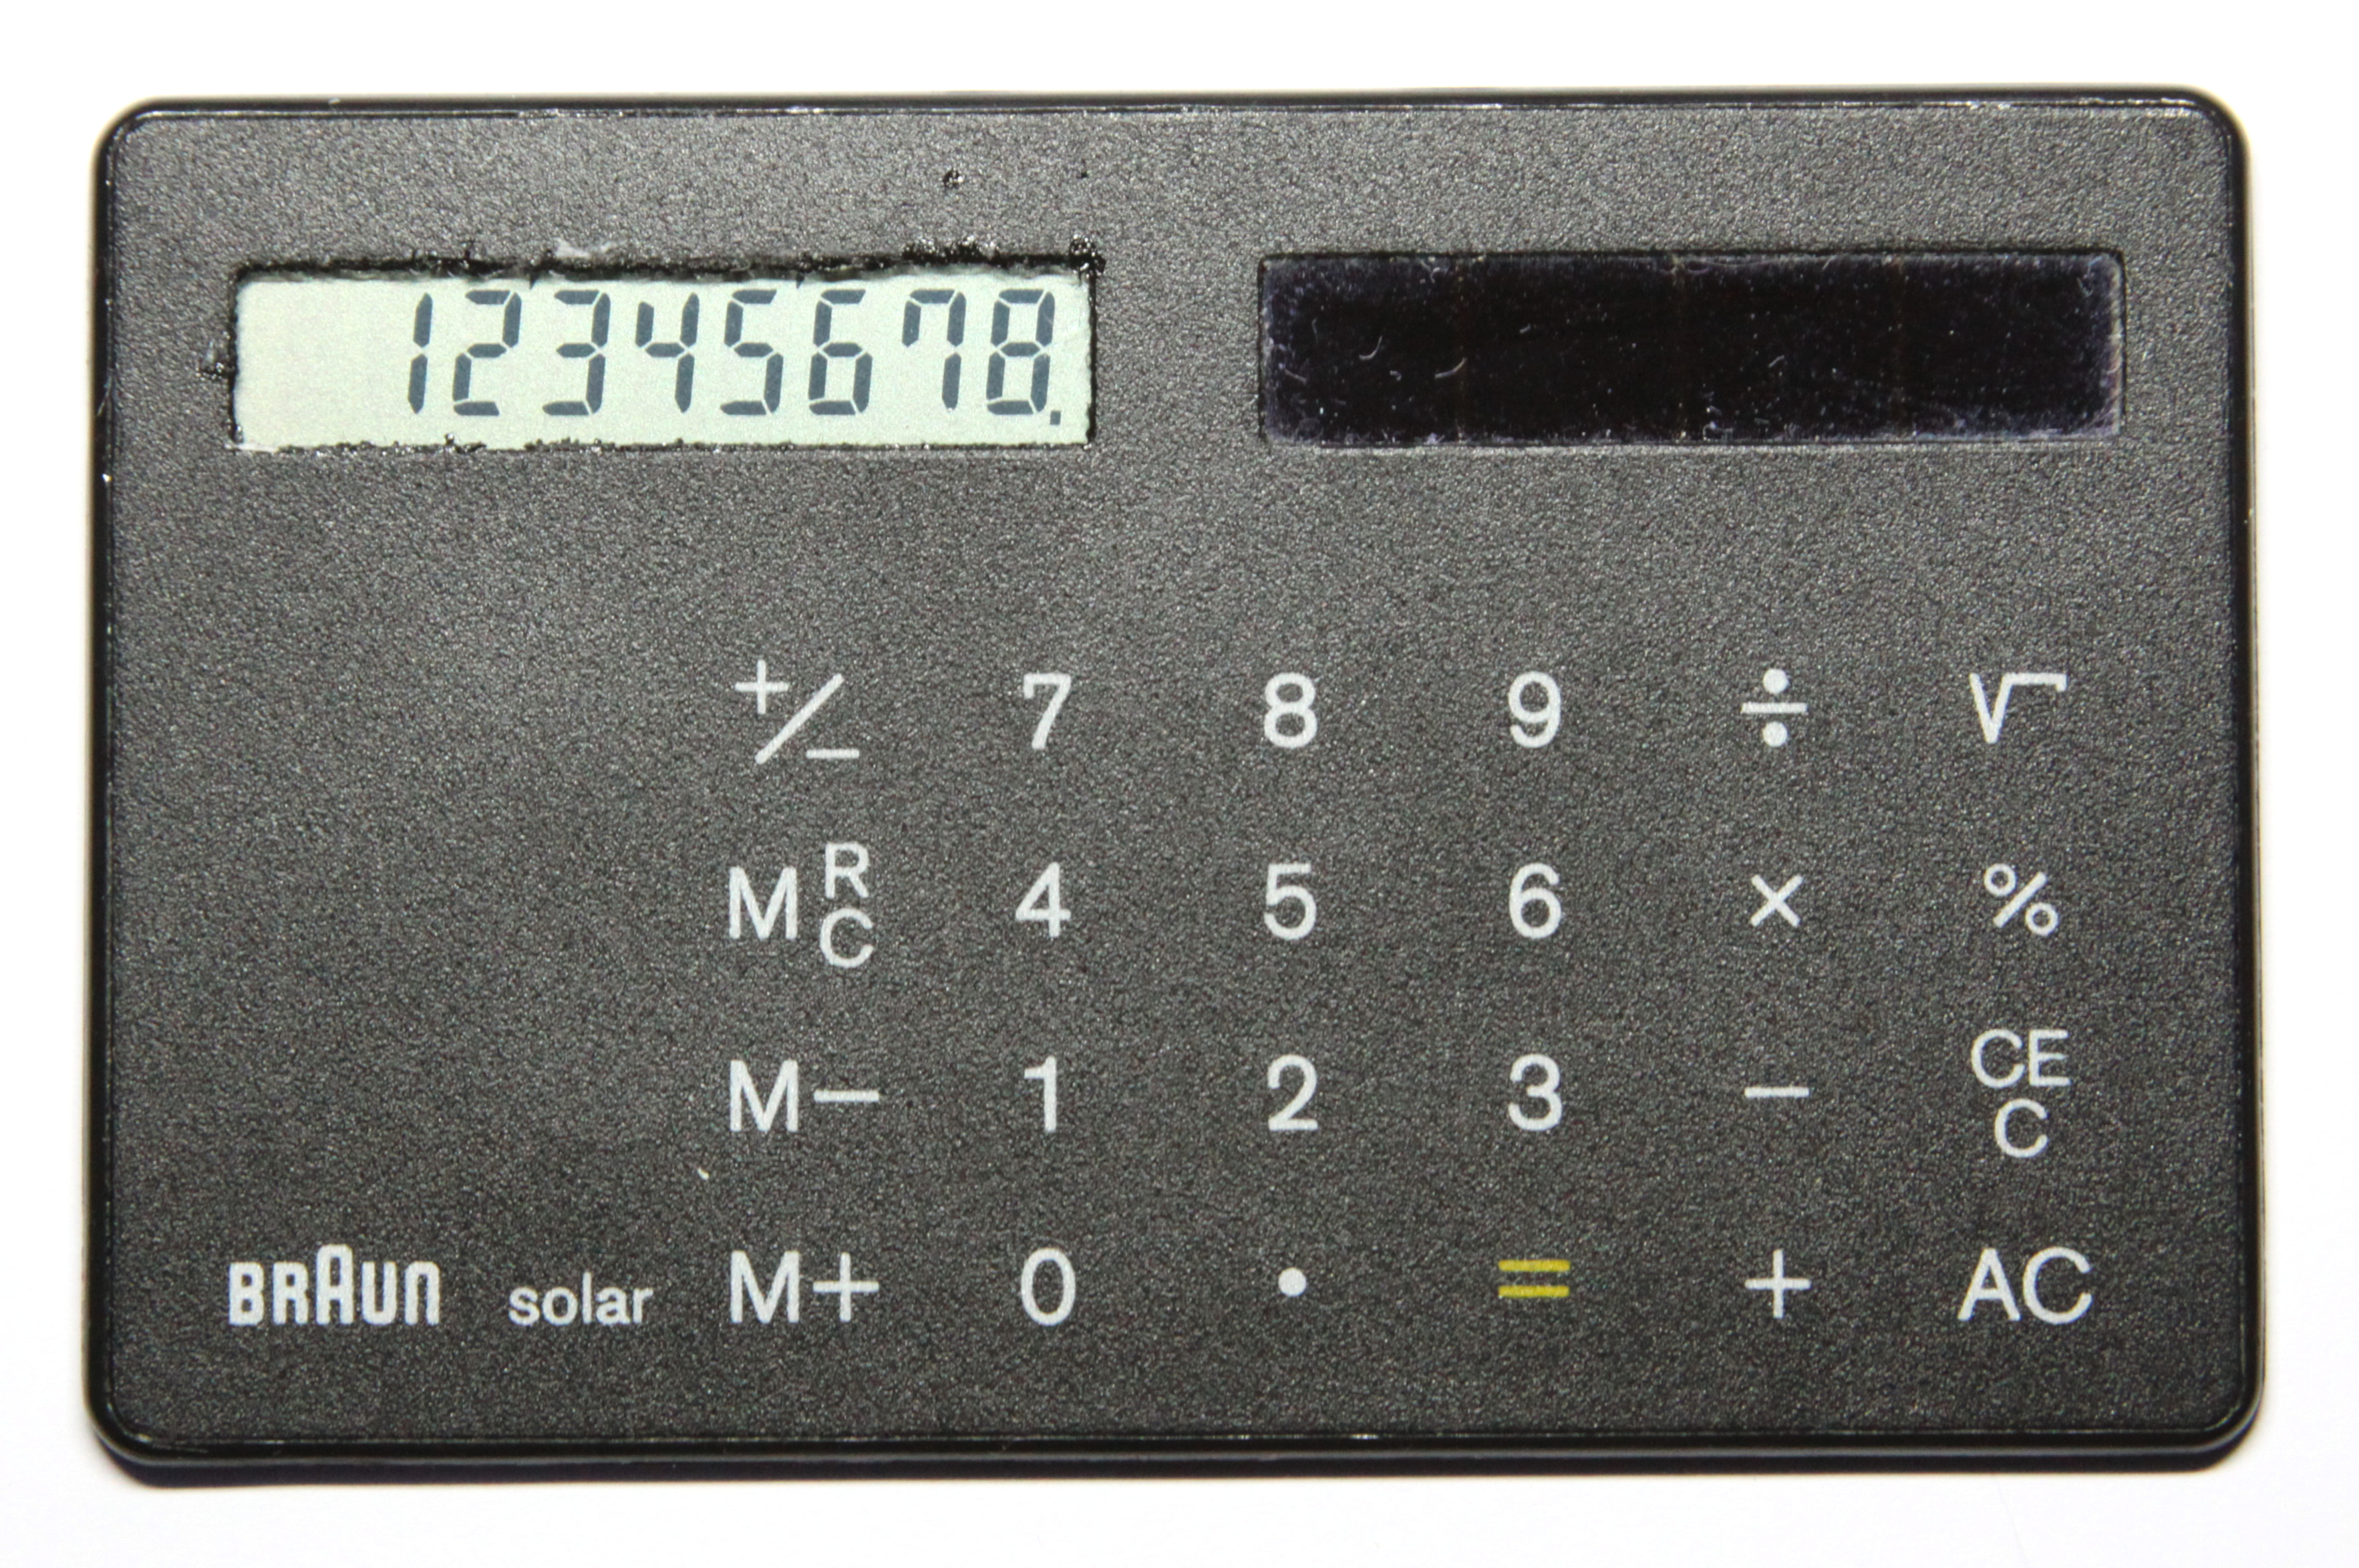 Calculator - Wikipedia